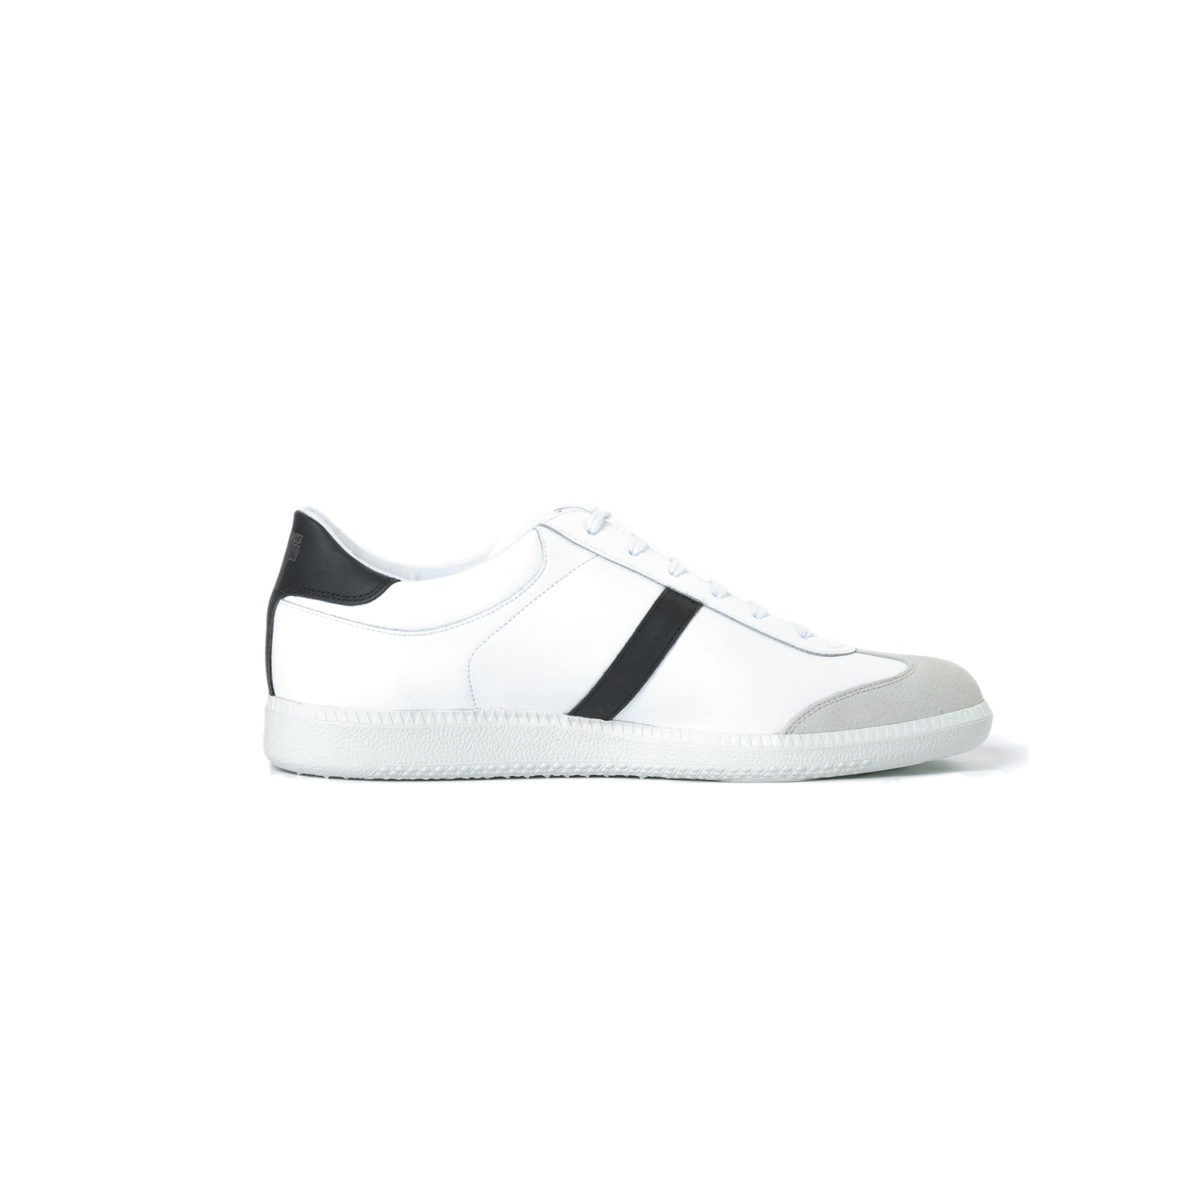 Tisza shoes - Compakt - Black-white-jubileum